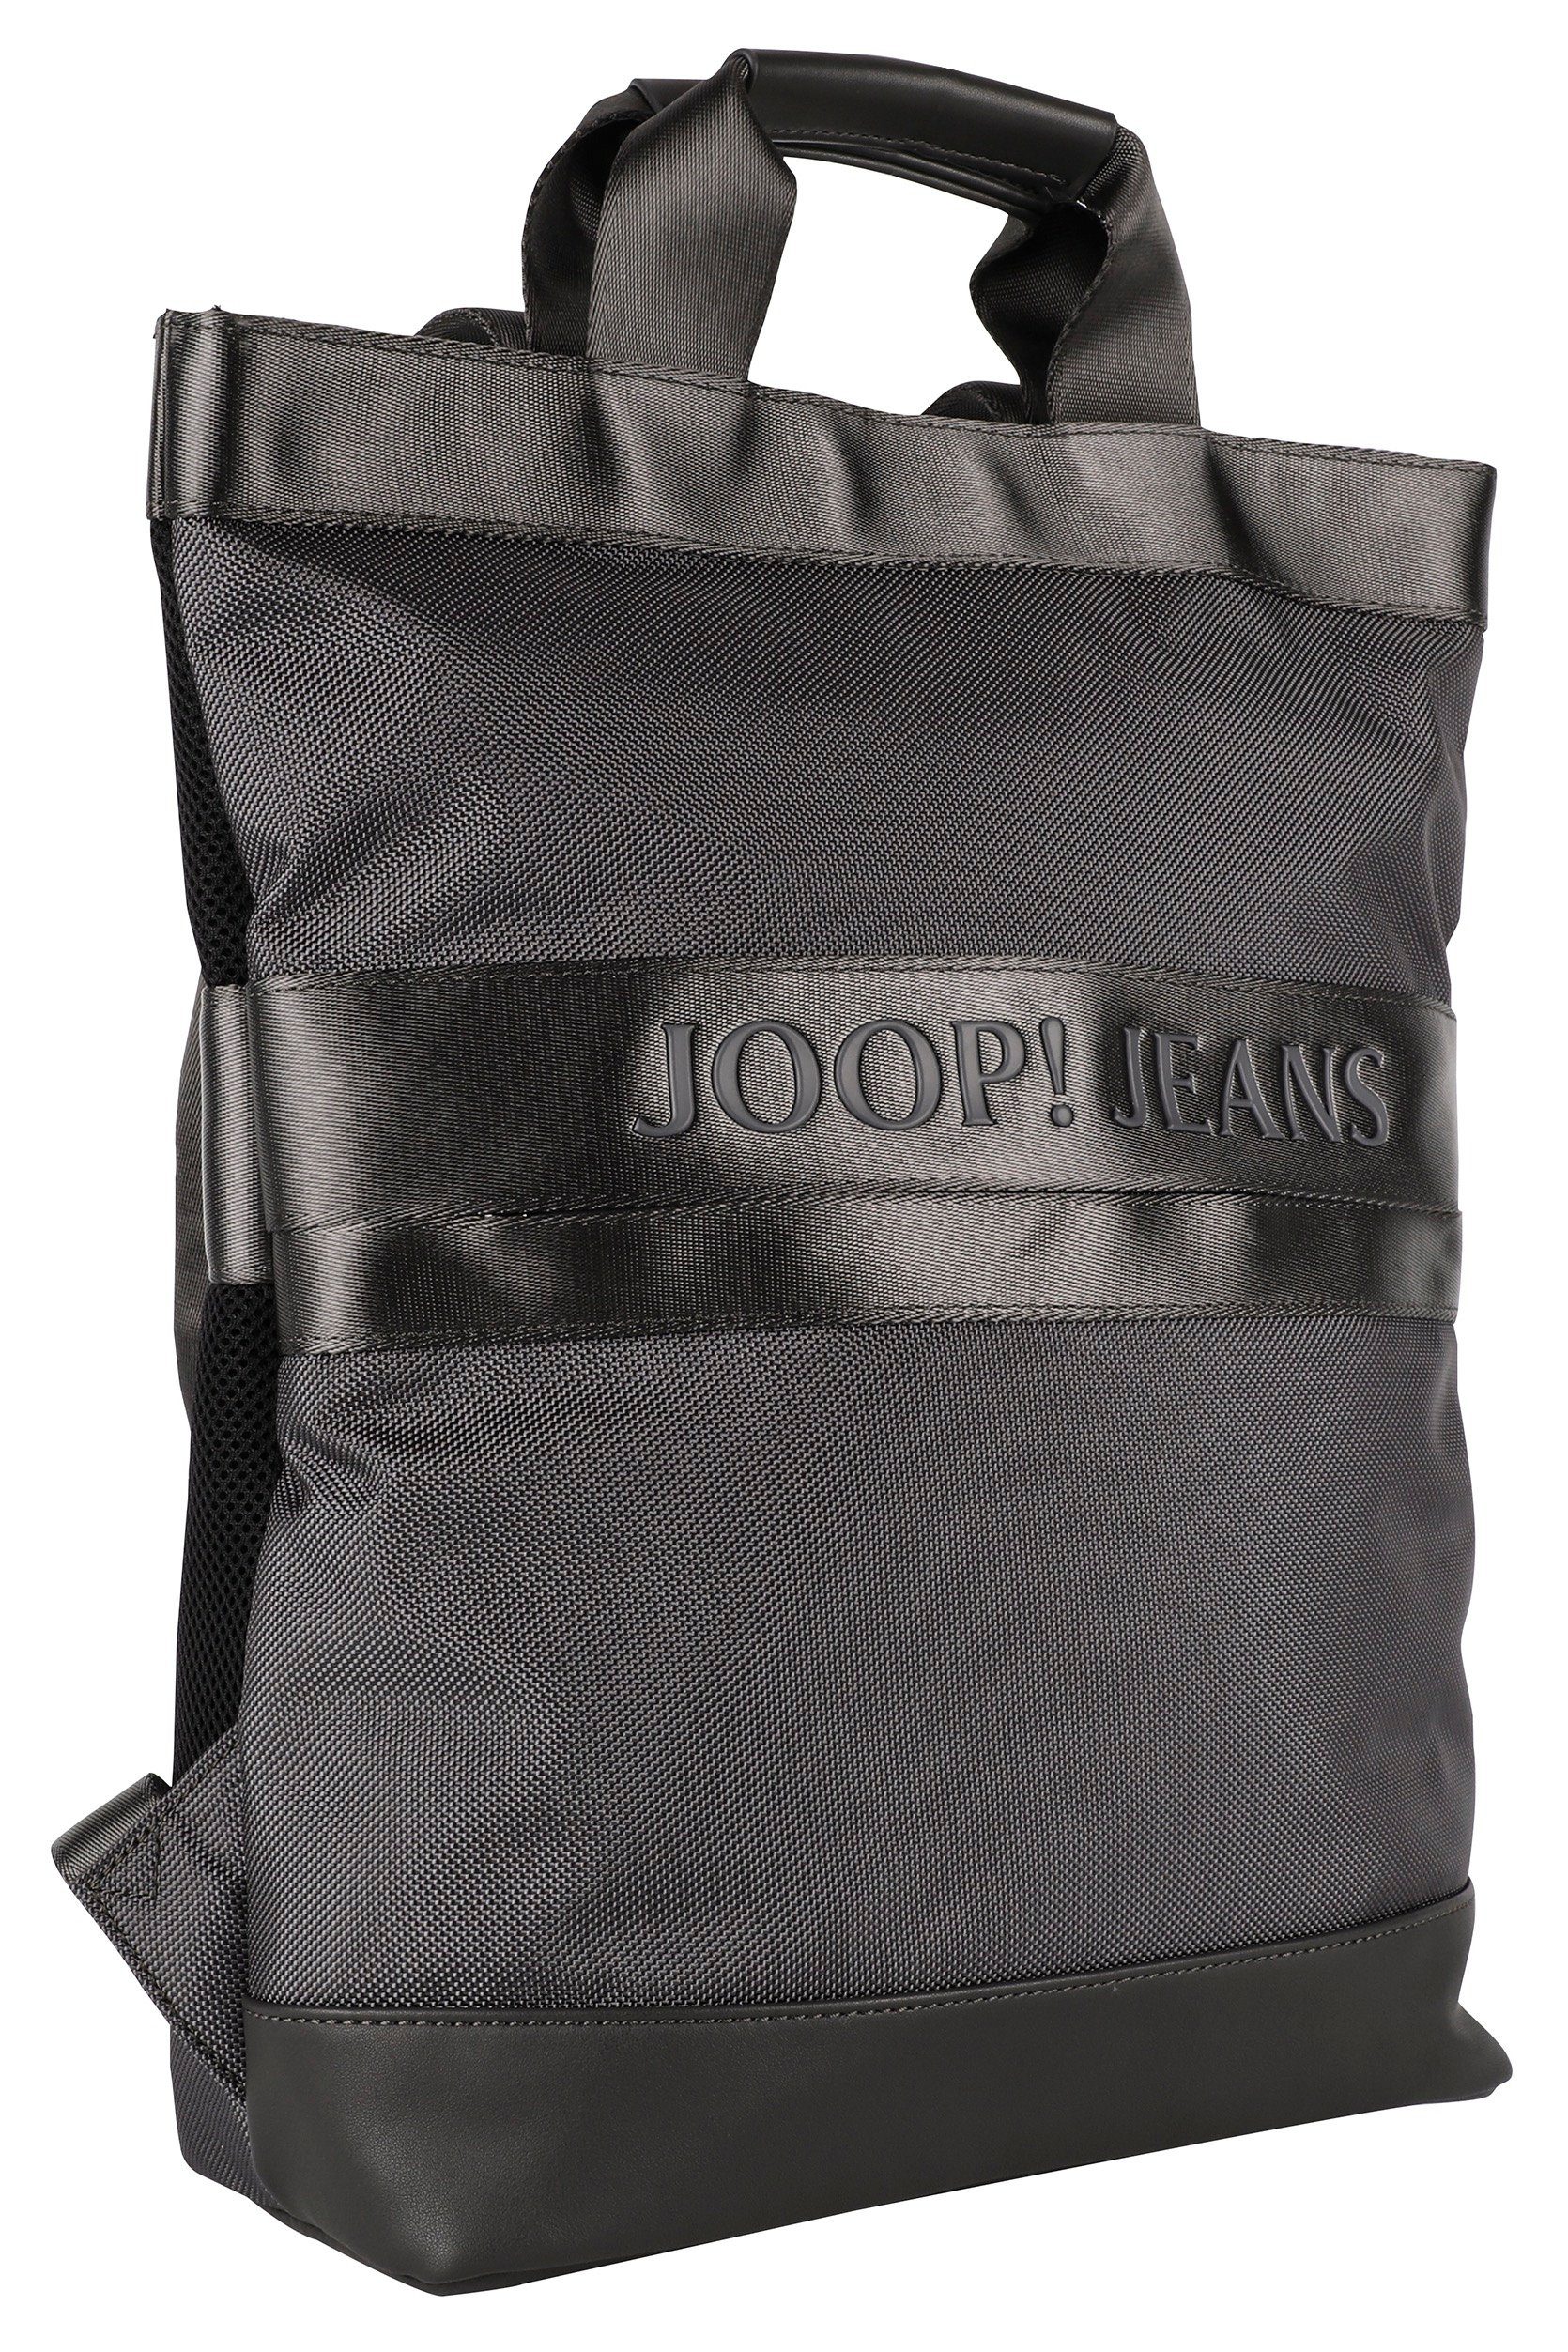 Joop Jeans Cityrucksack backpack dunkelgrau Reißverschluss-Vortasche modica svz, falk mit